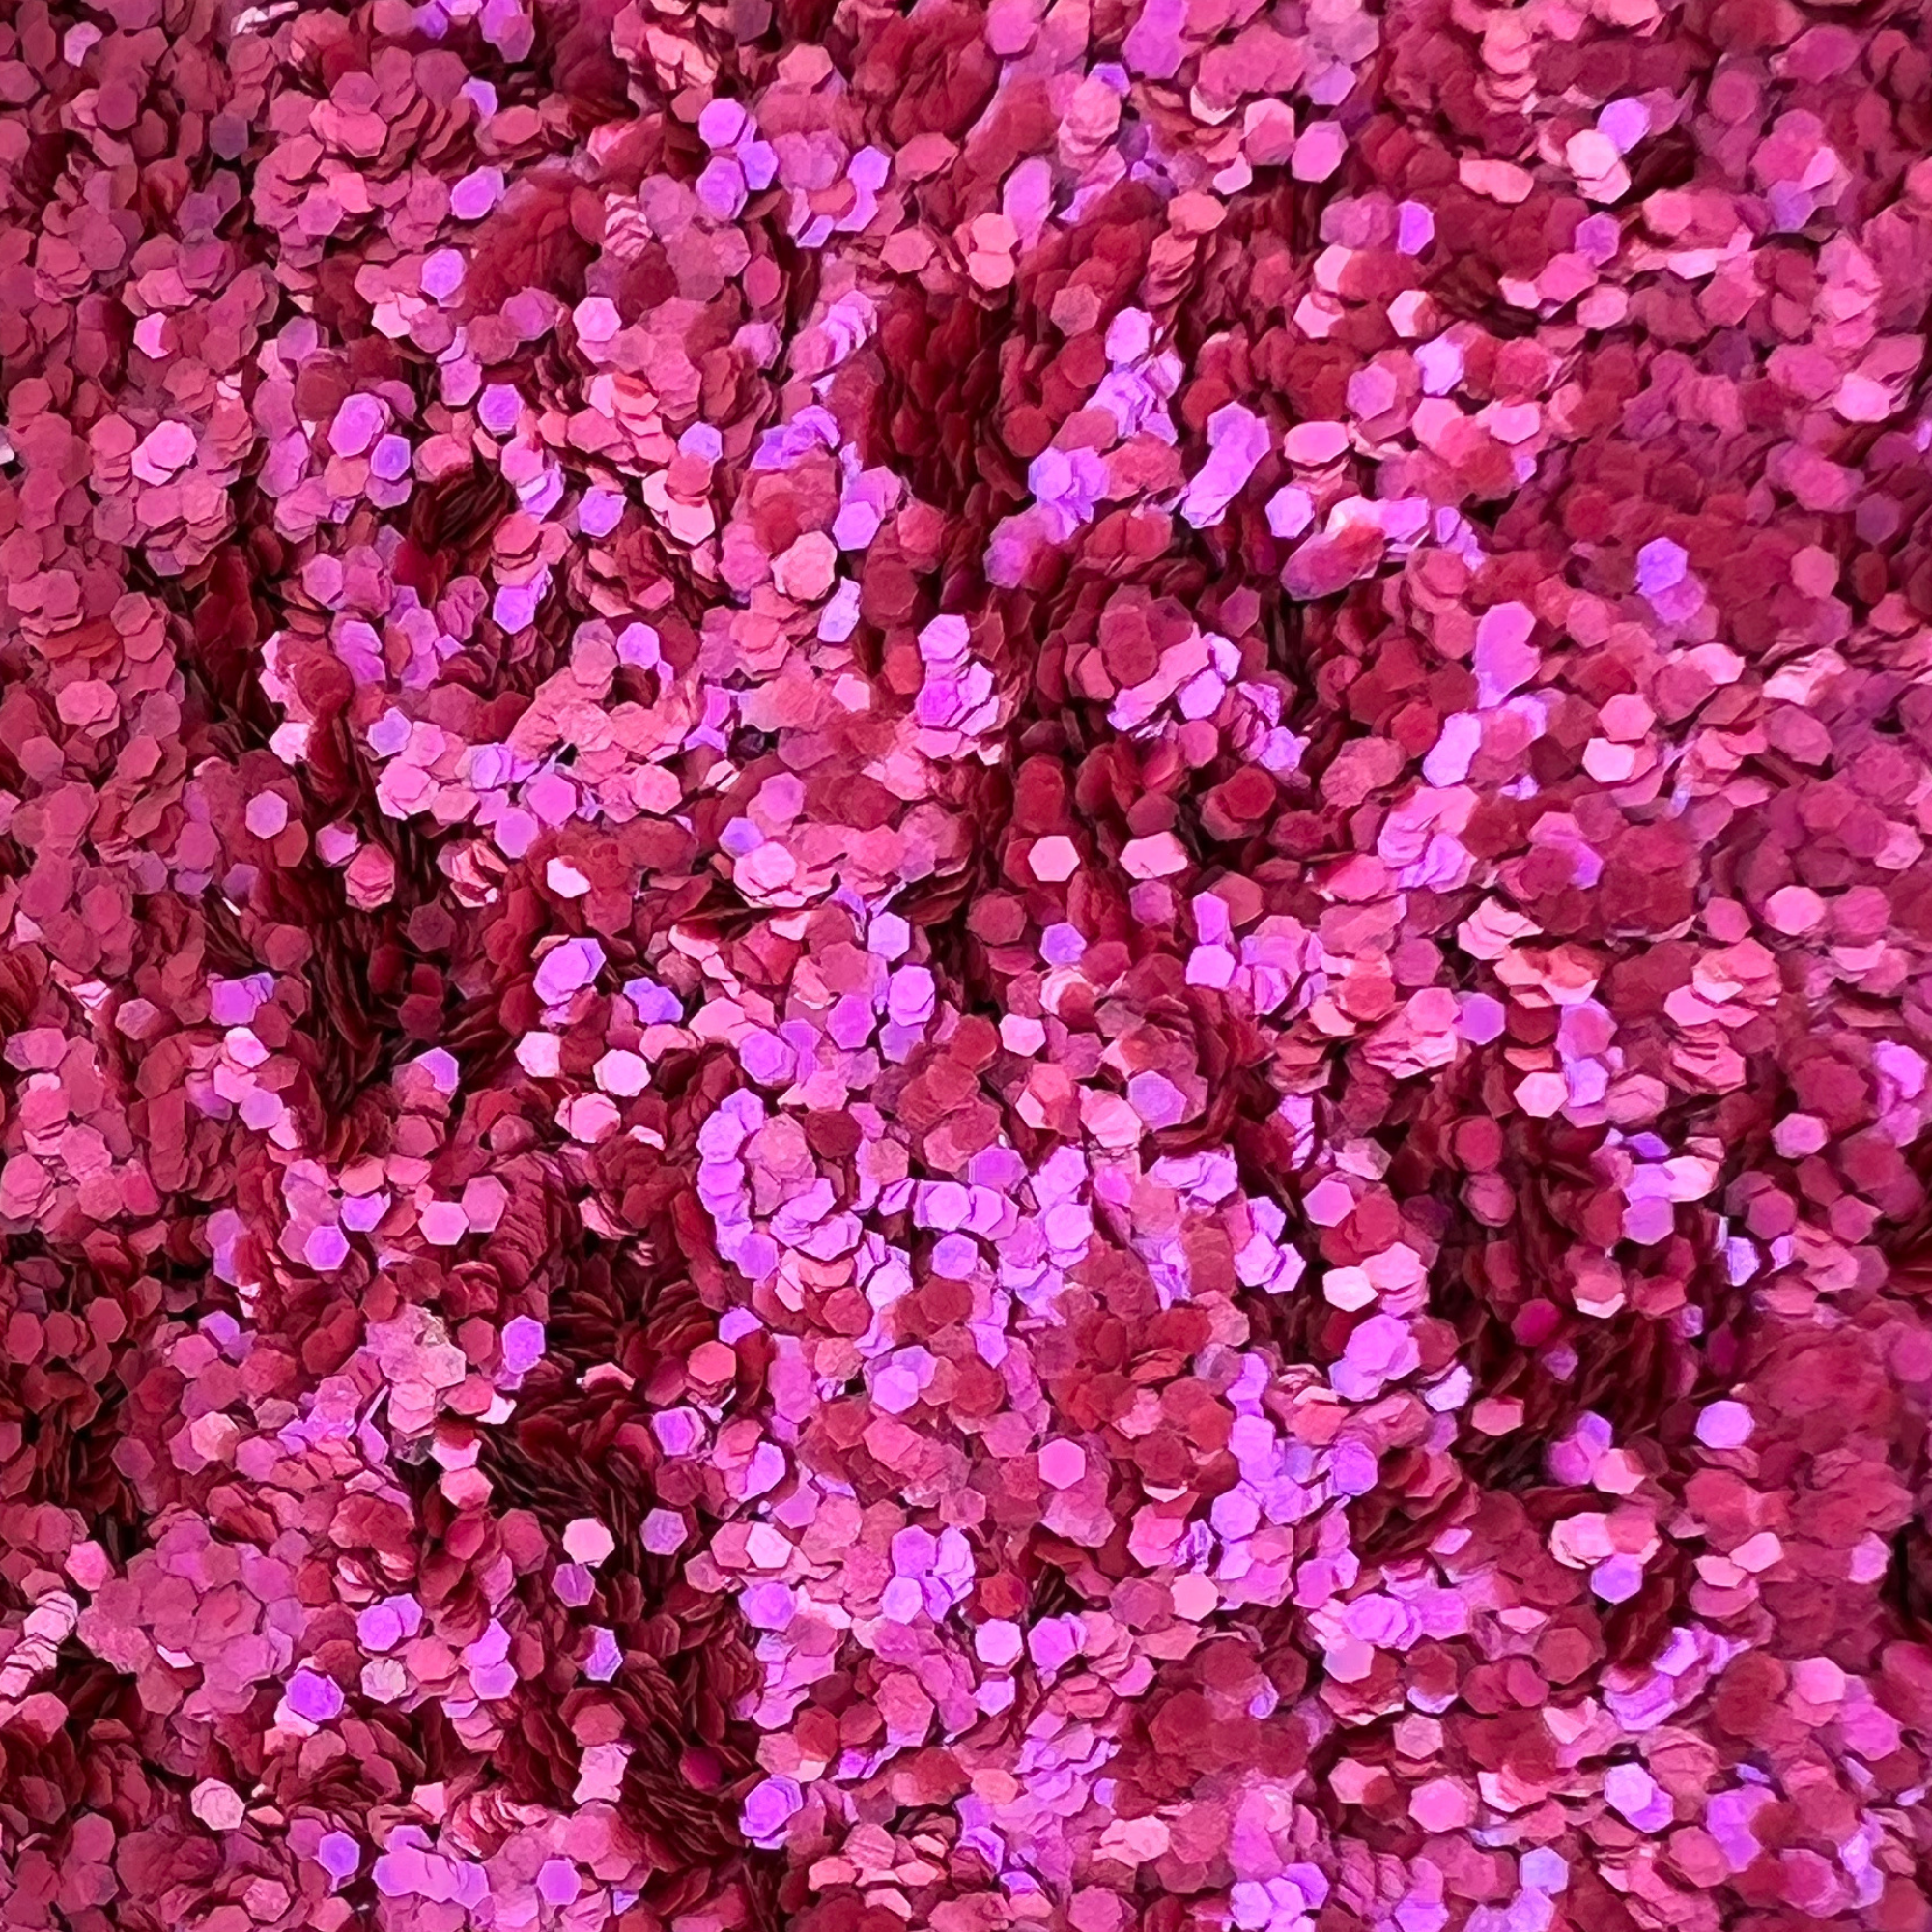 raspberry sorbet pink shade of chunky 100% plastic free biodegradable glitter by Luminosity Glitter